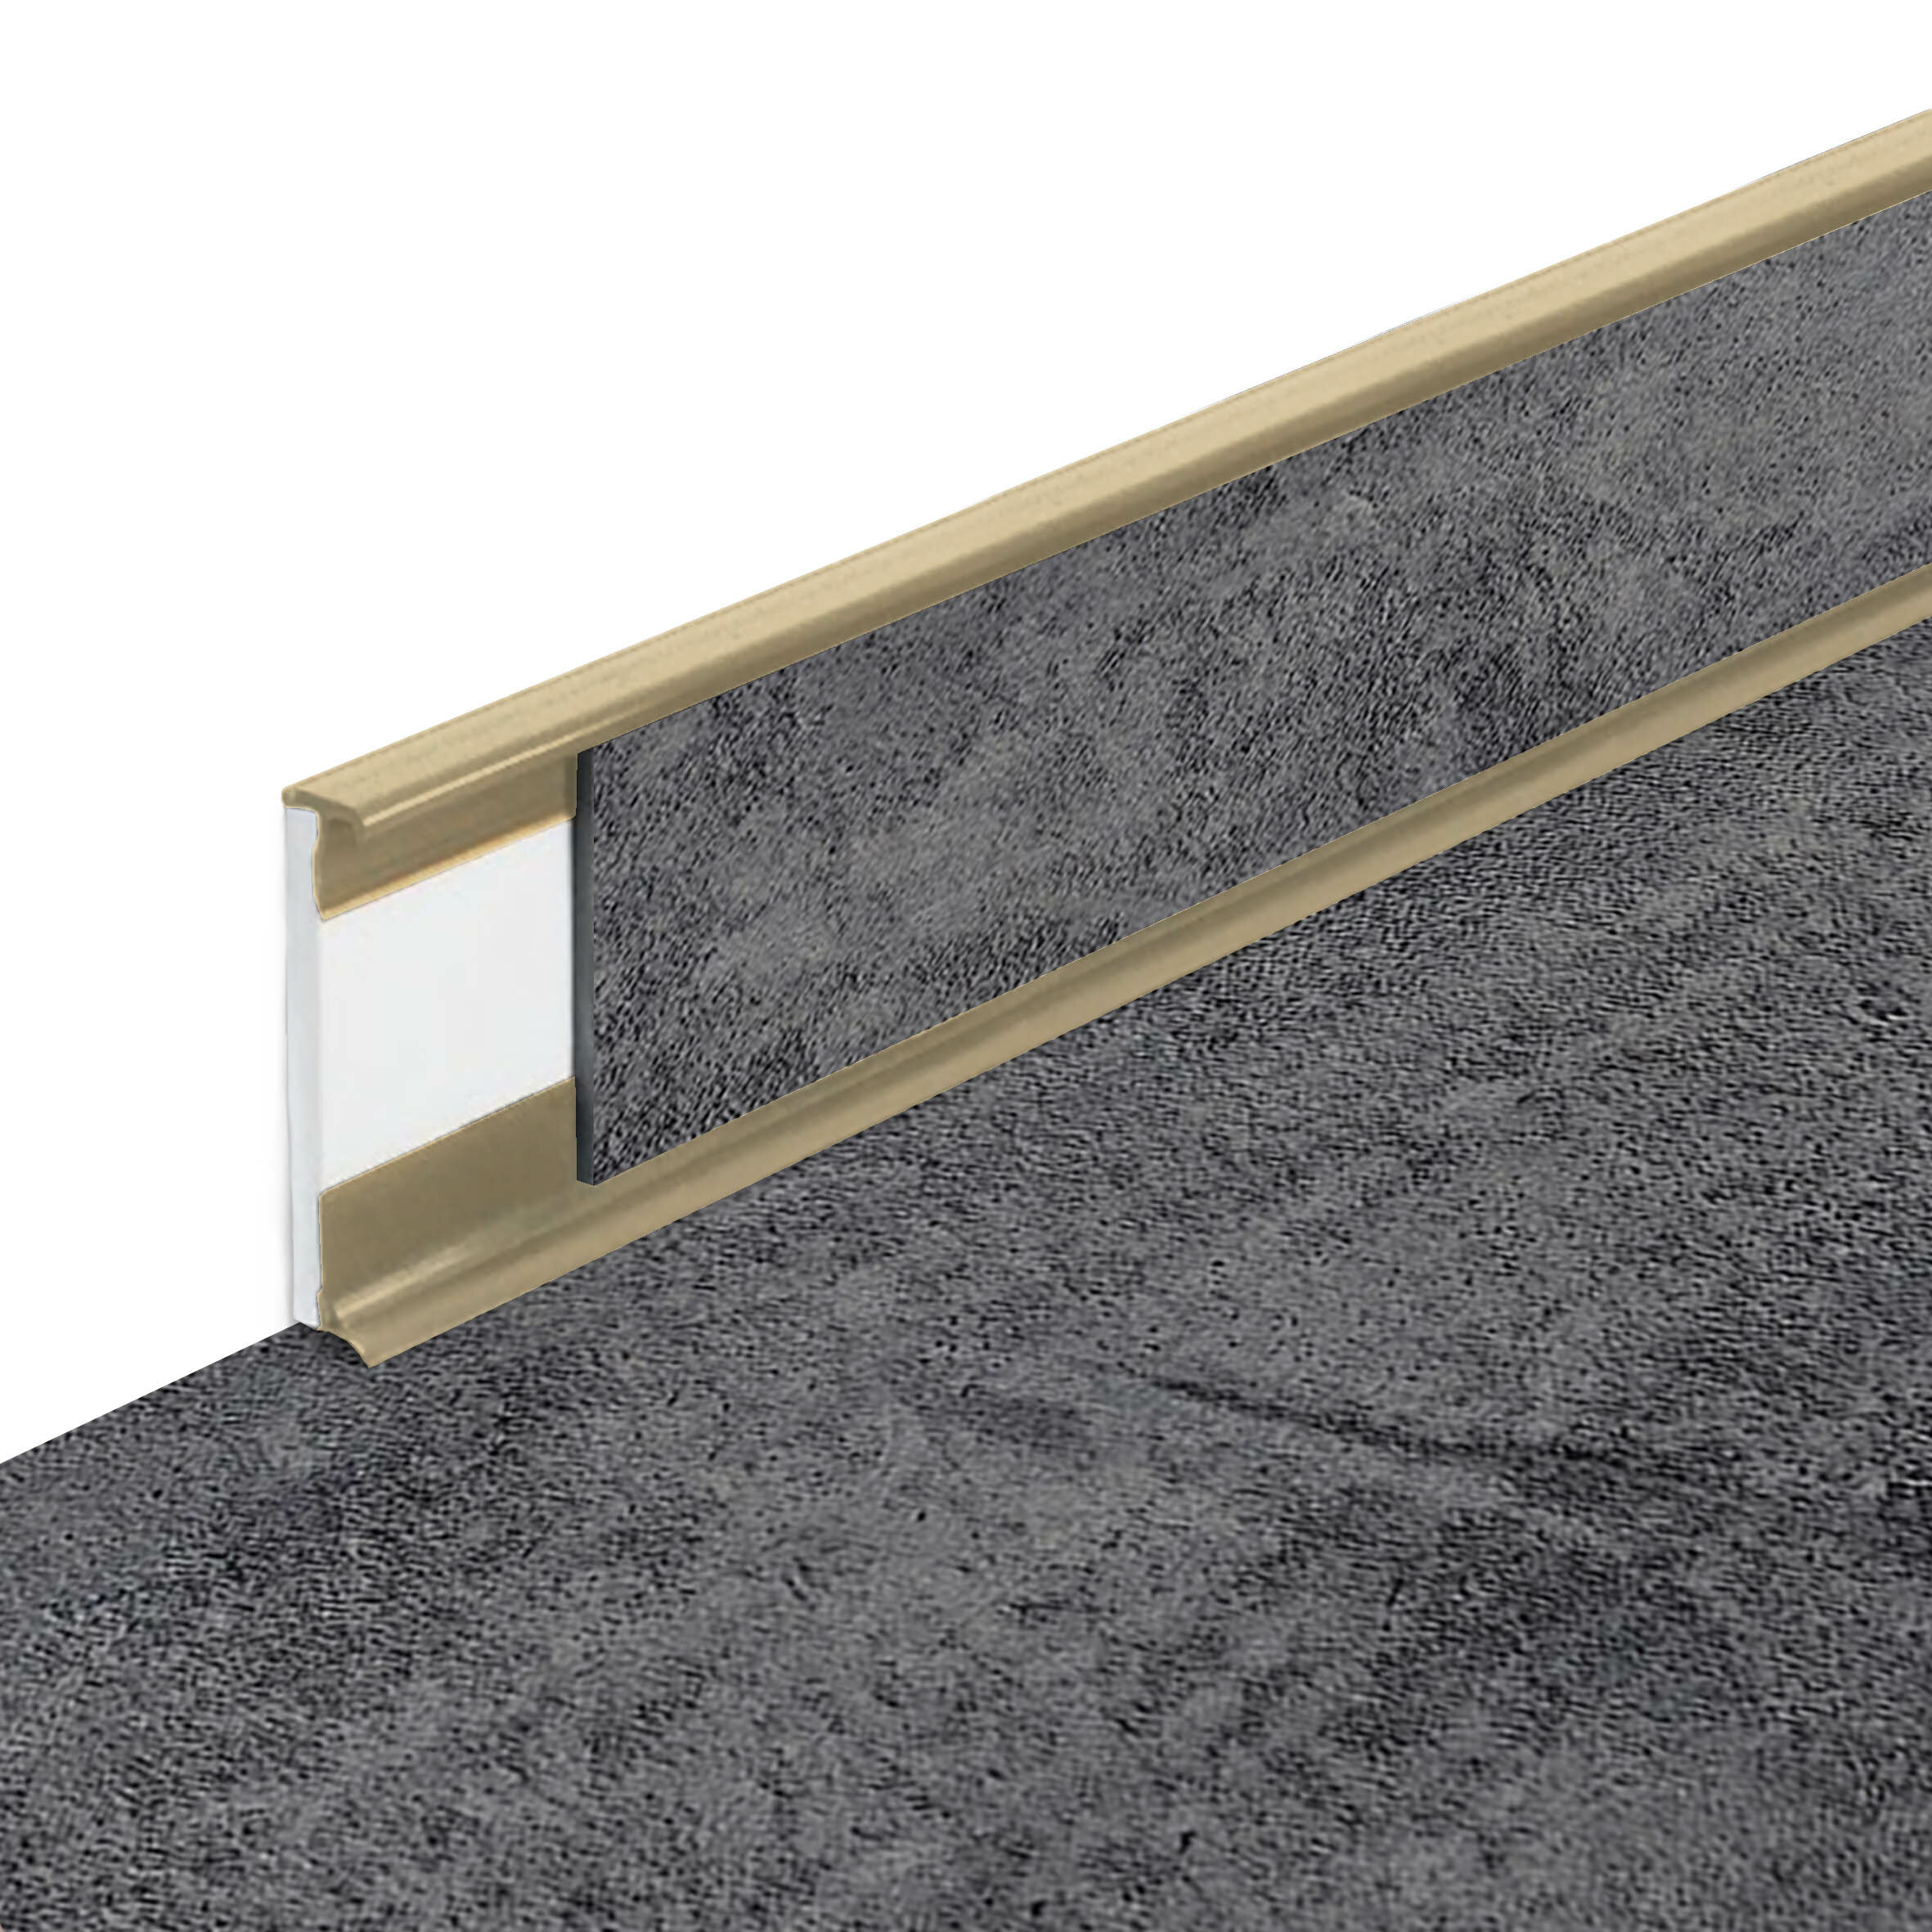 PVC vinylová soklová podlahová lišta Fortelock Business Forsen rugged canyon C021 beige - délka 200 cm, výška 5,8 cm, tloušťka 1,2 cm